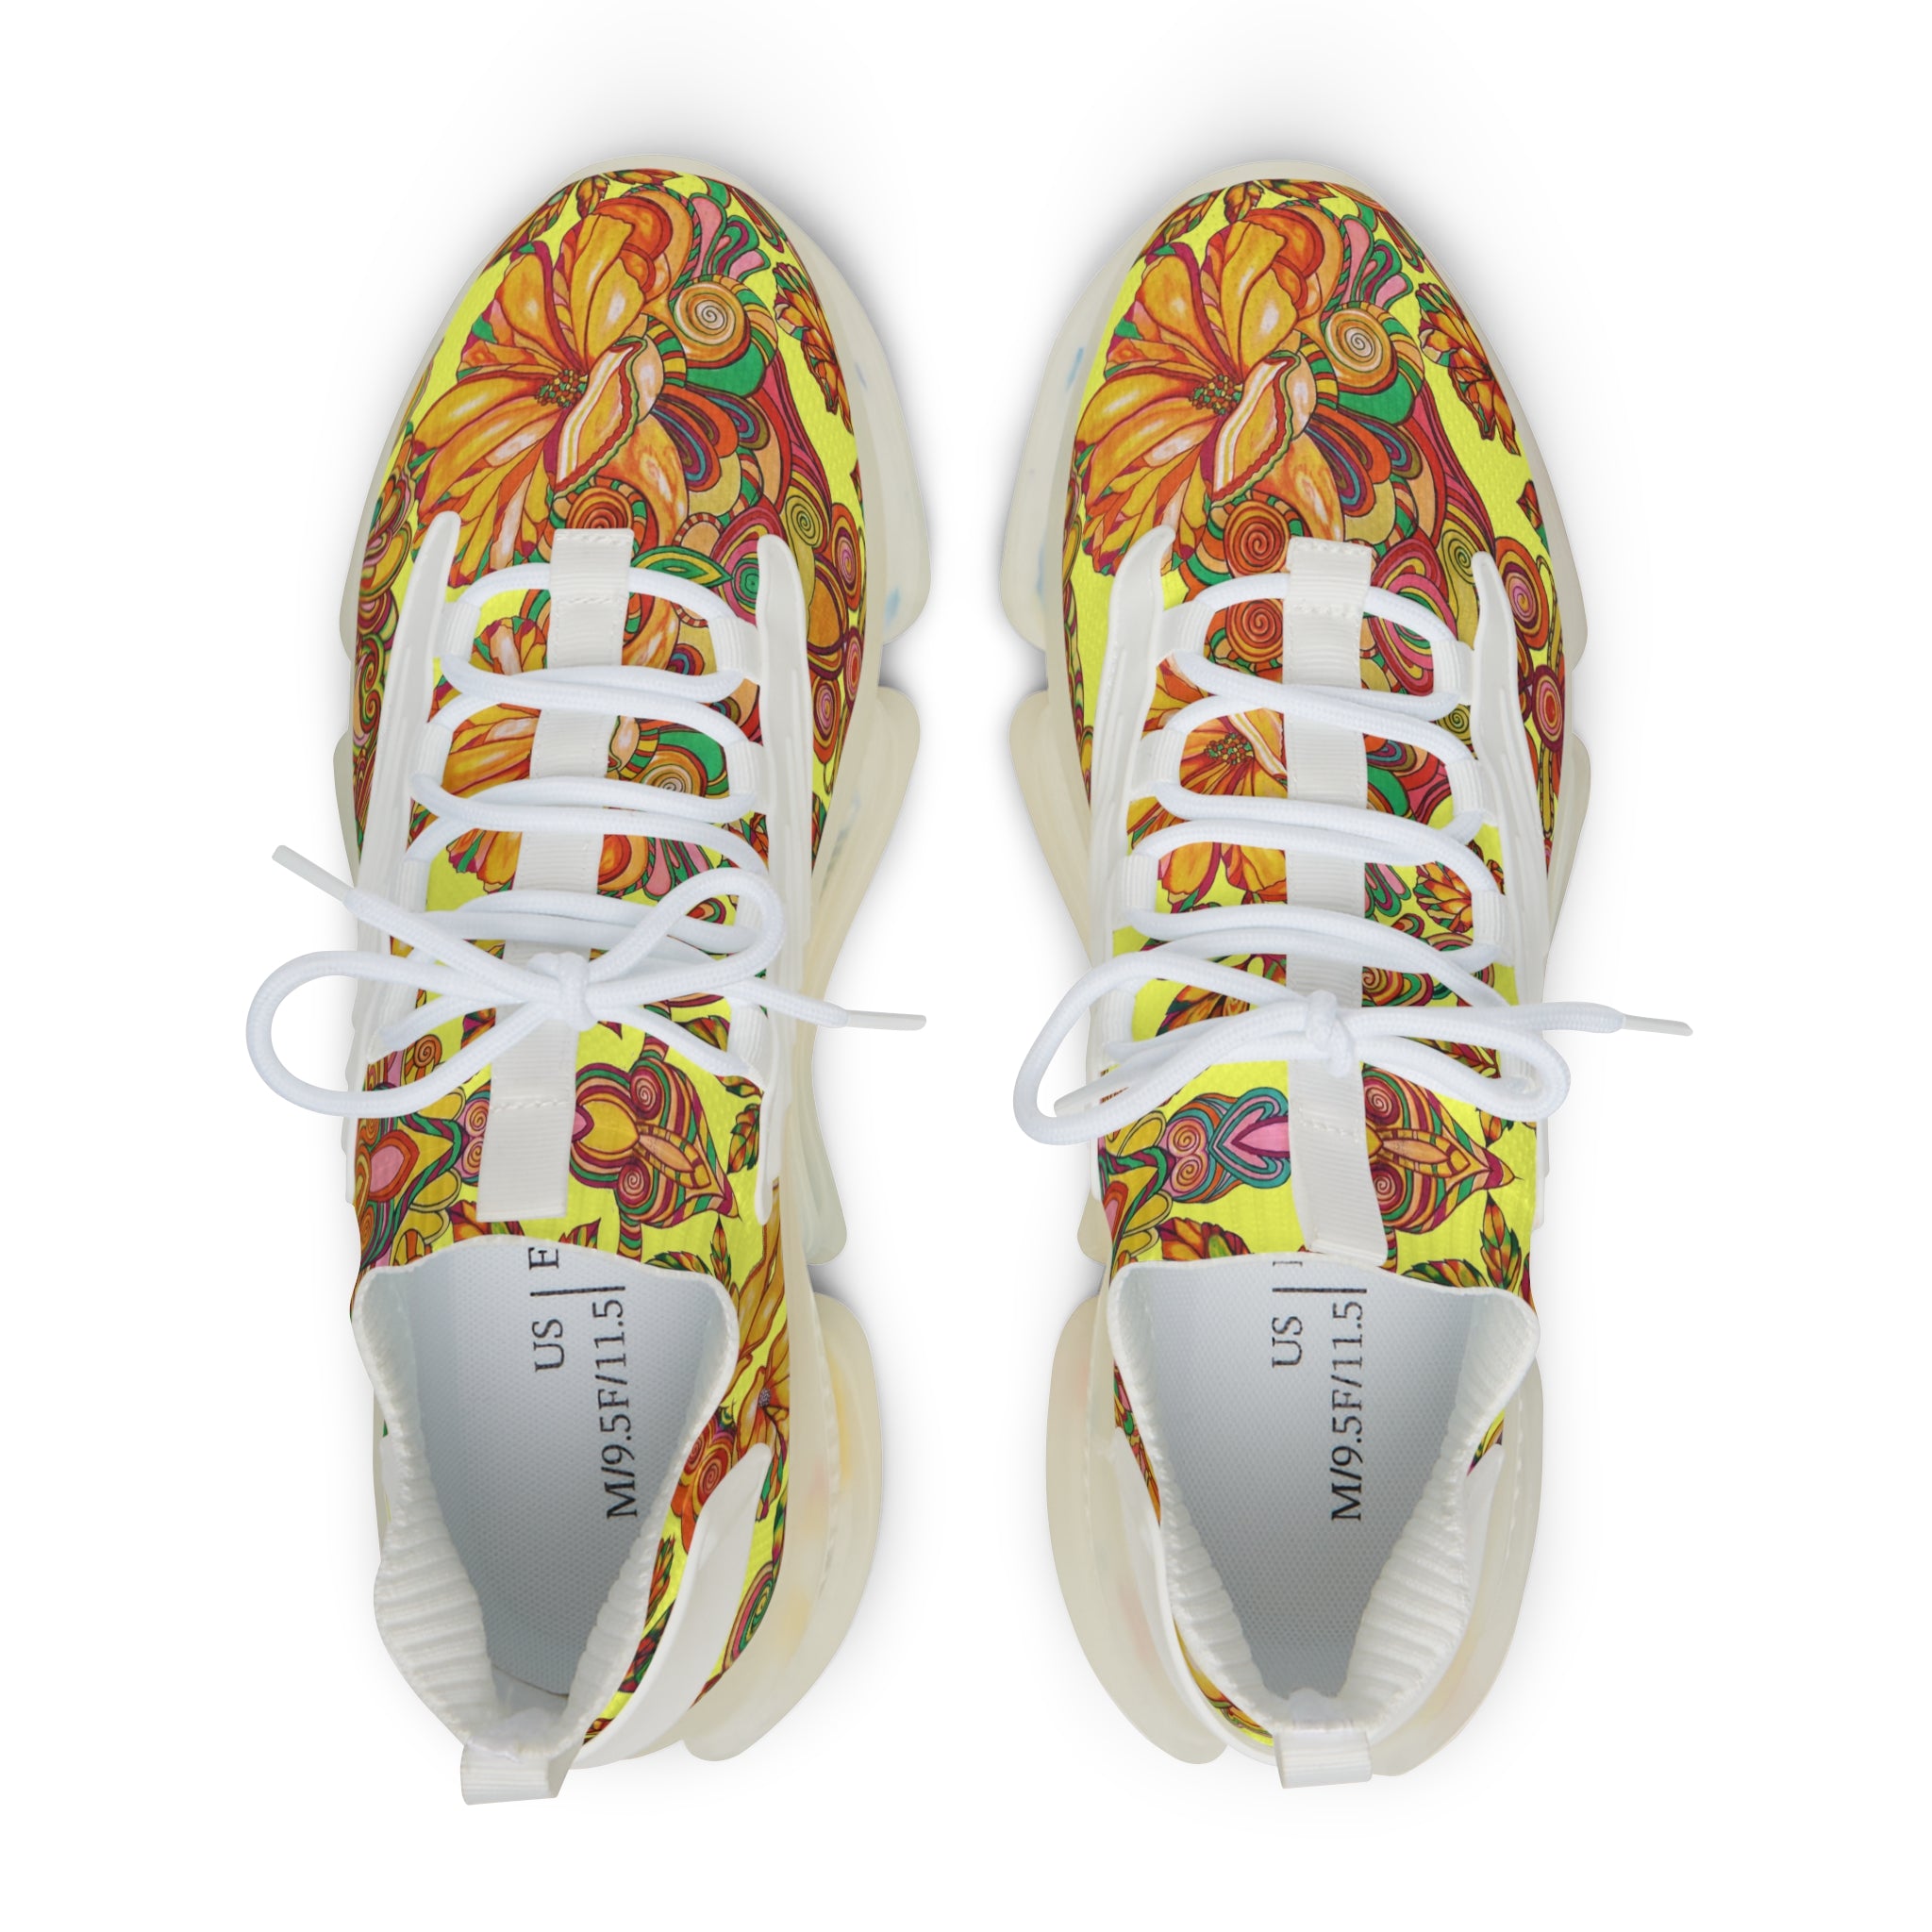 Canary Artsy Floral OTT Men's Mesh Knit Sneakers